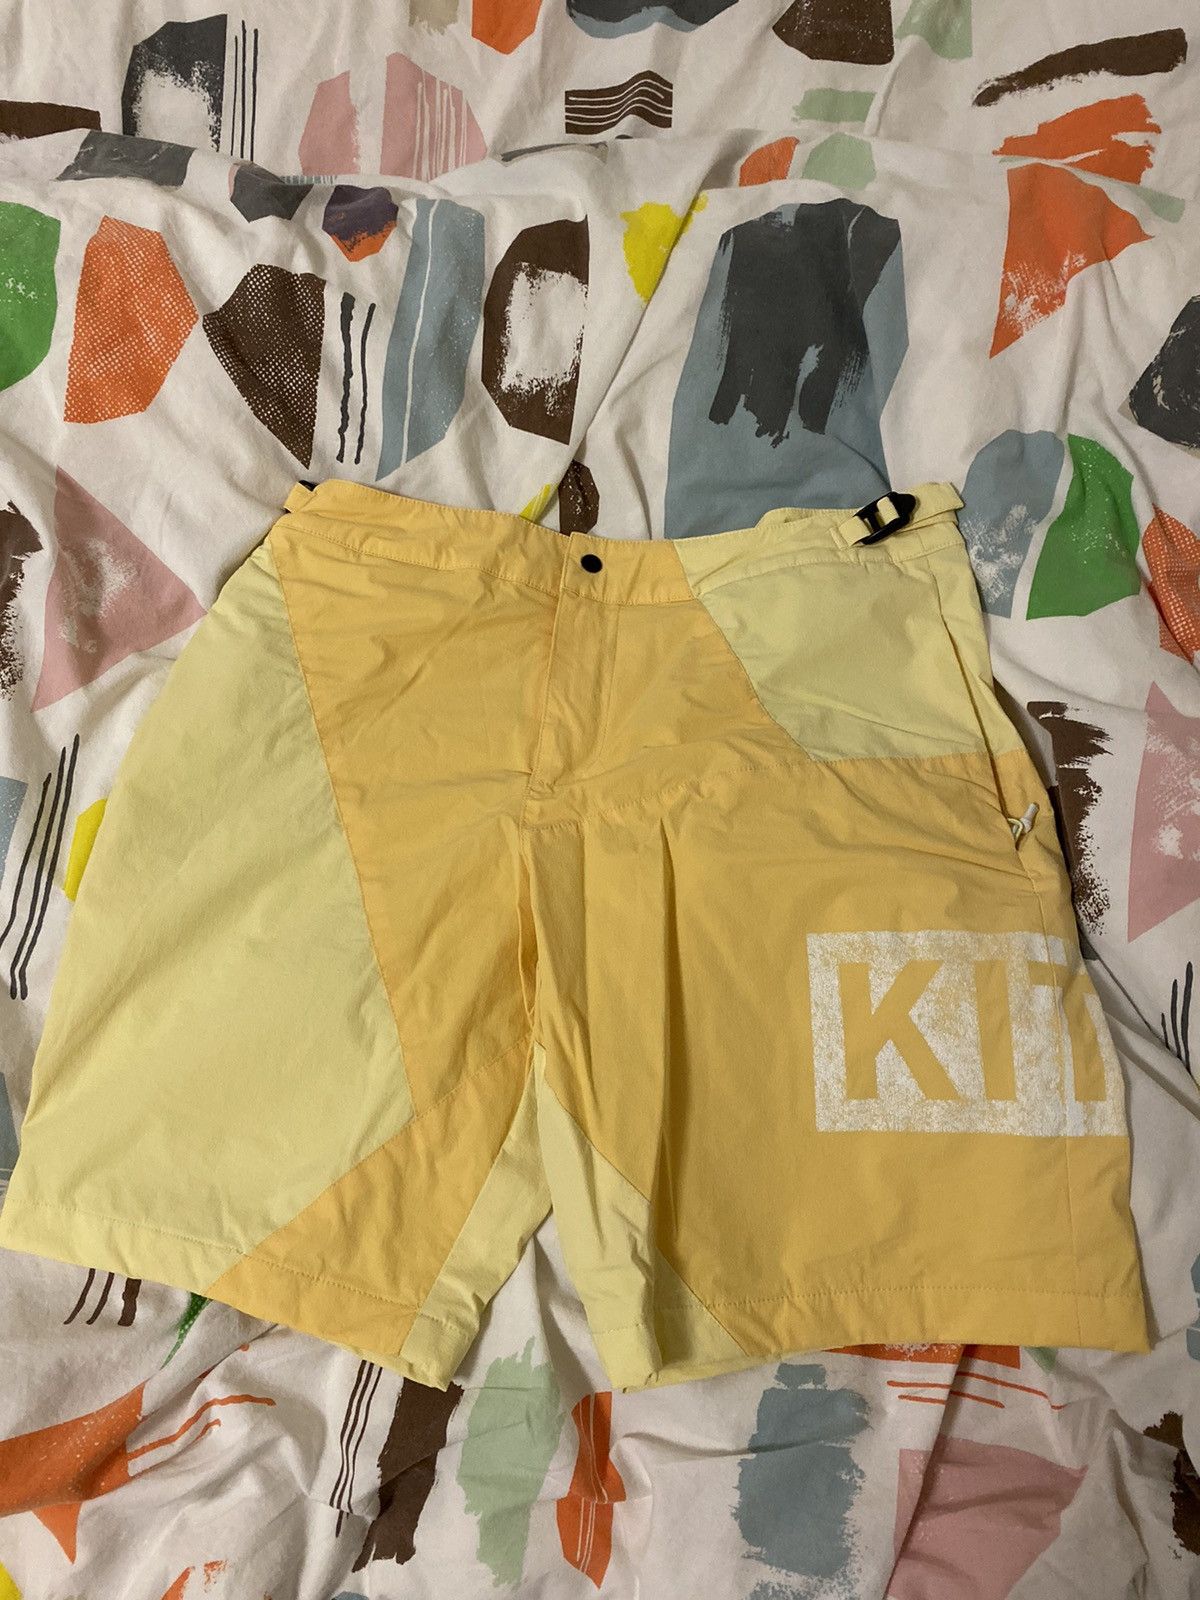 Kith X Columbia Beige/Green Deschutes Valley Reversible Shorts M